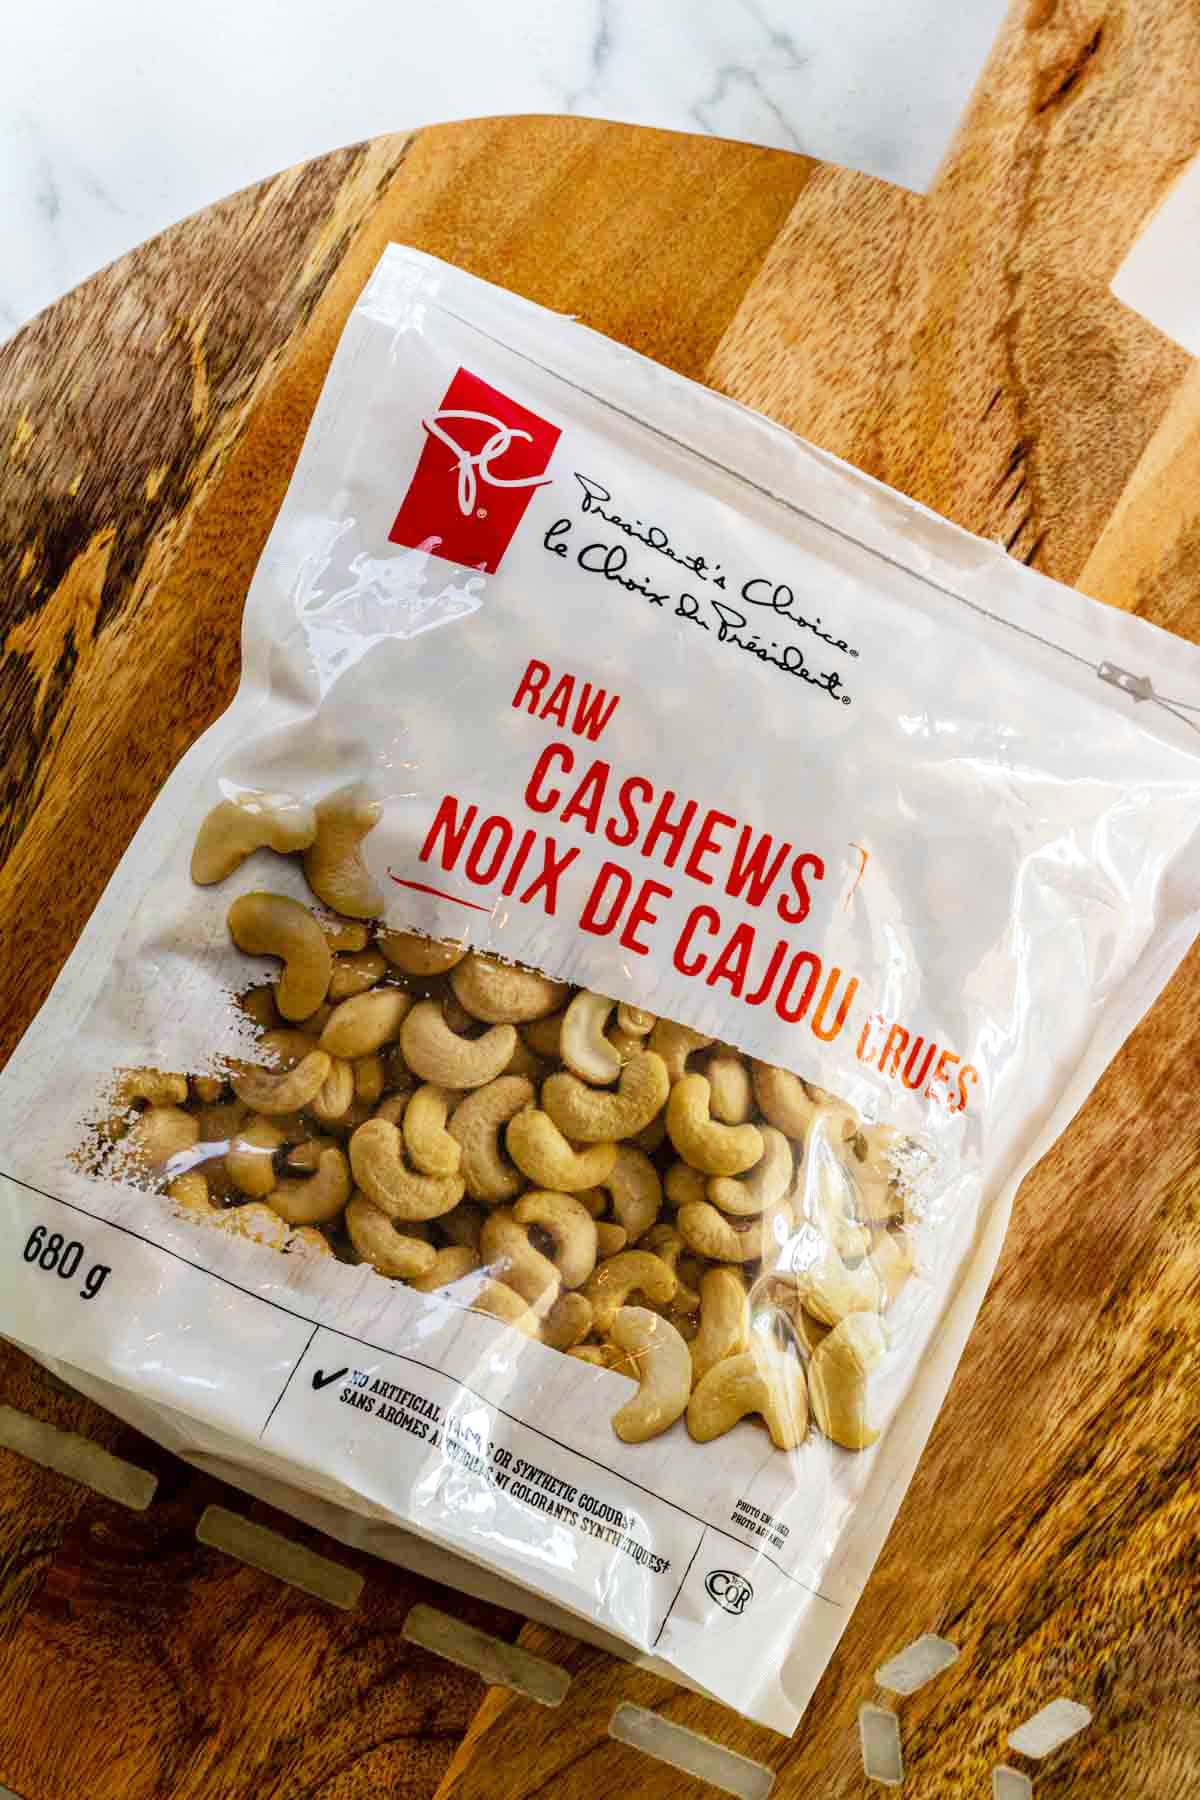 A bag of cashews on a cutting board.